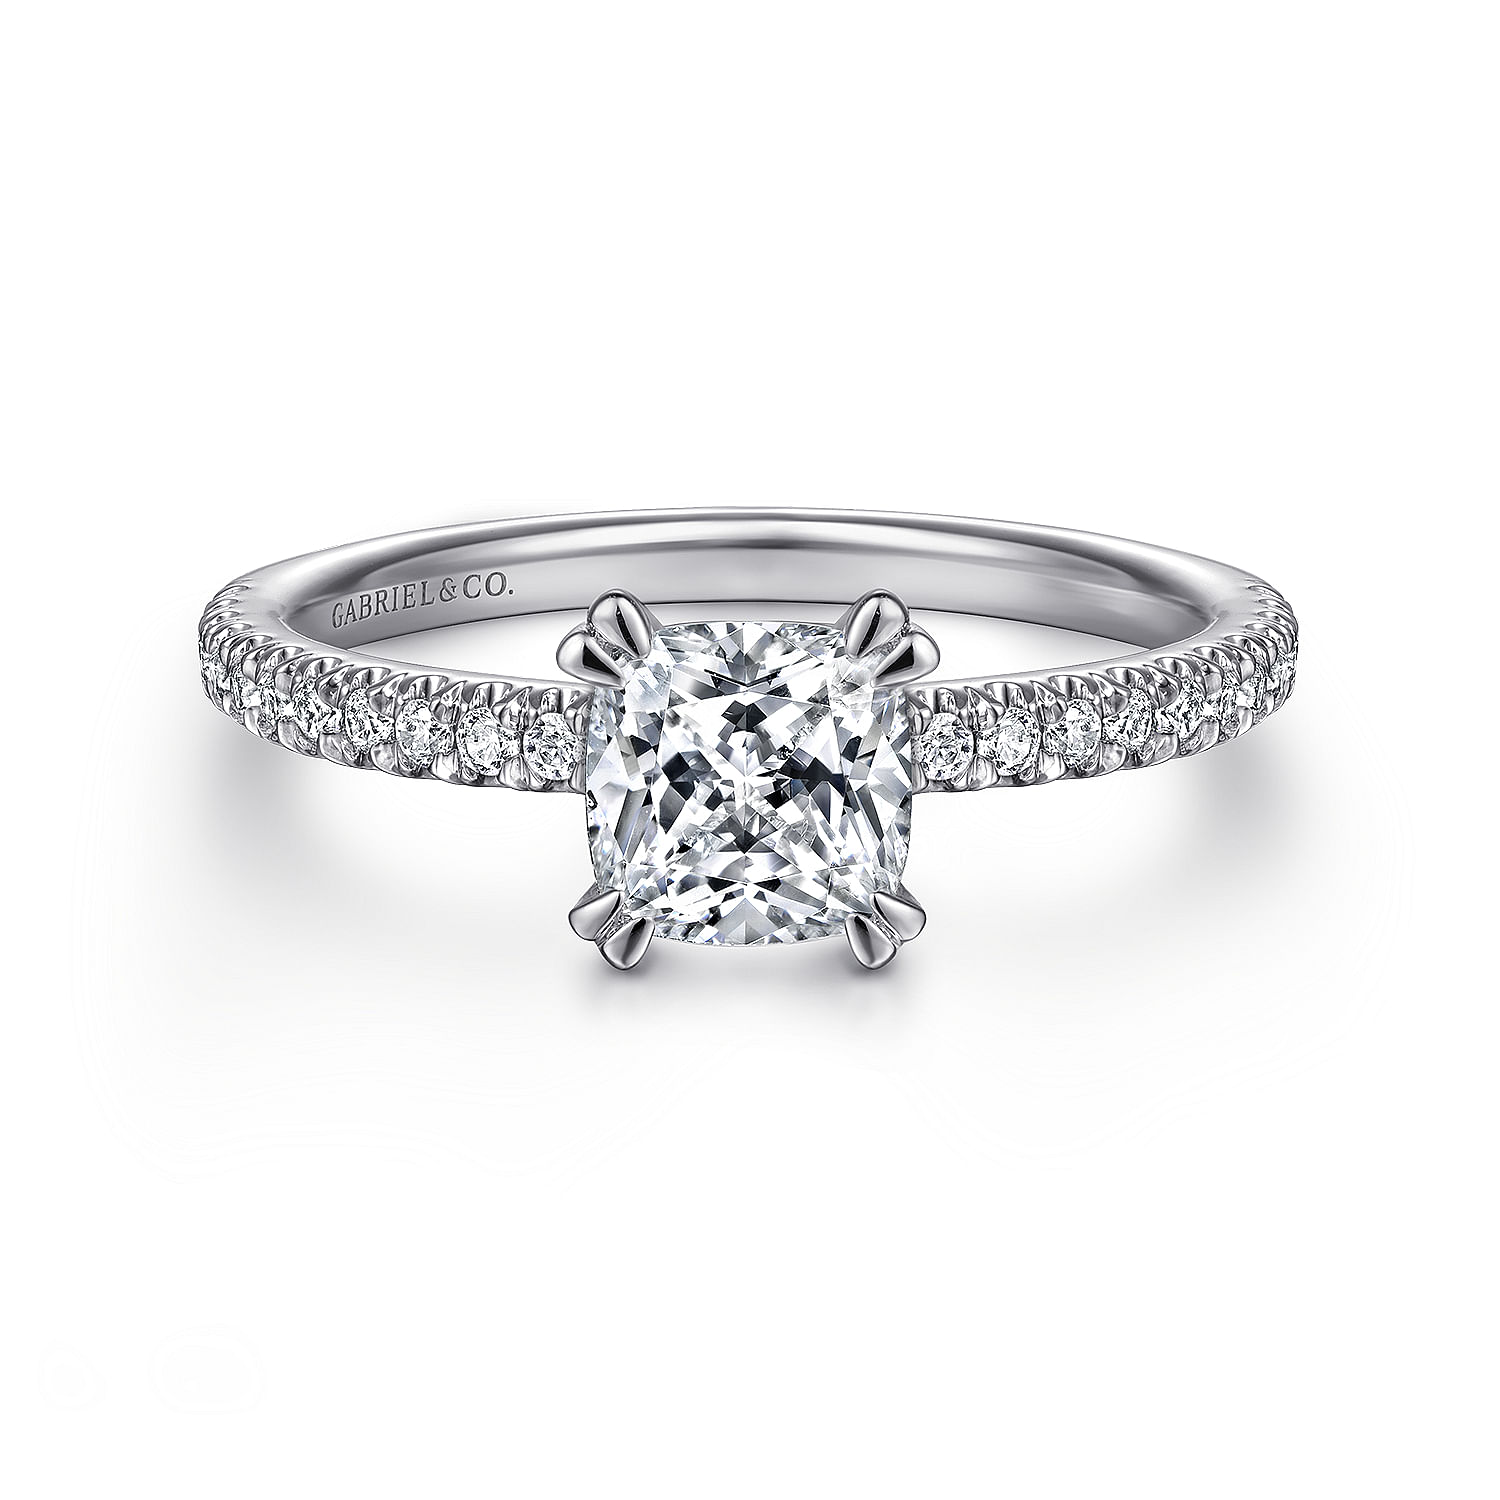 Serenity - 14K White Gold Cushion Cut Diamond Engagement Ring